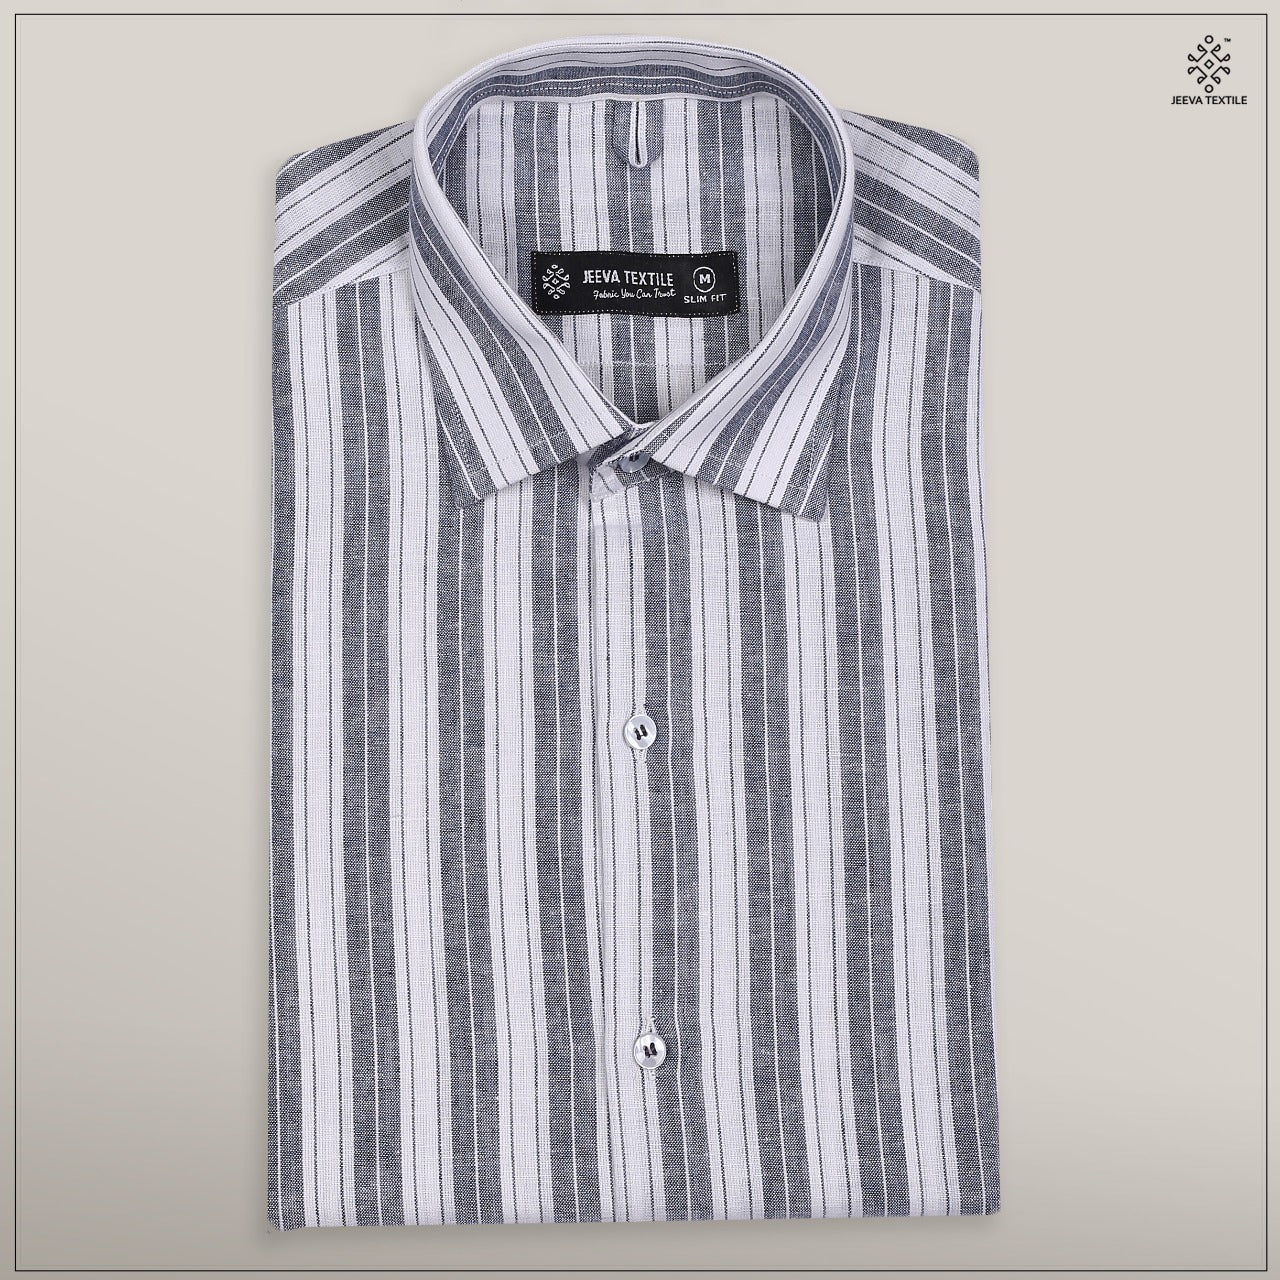 Stripe Grey & White - Linen Import Irish Cotton Shirt